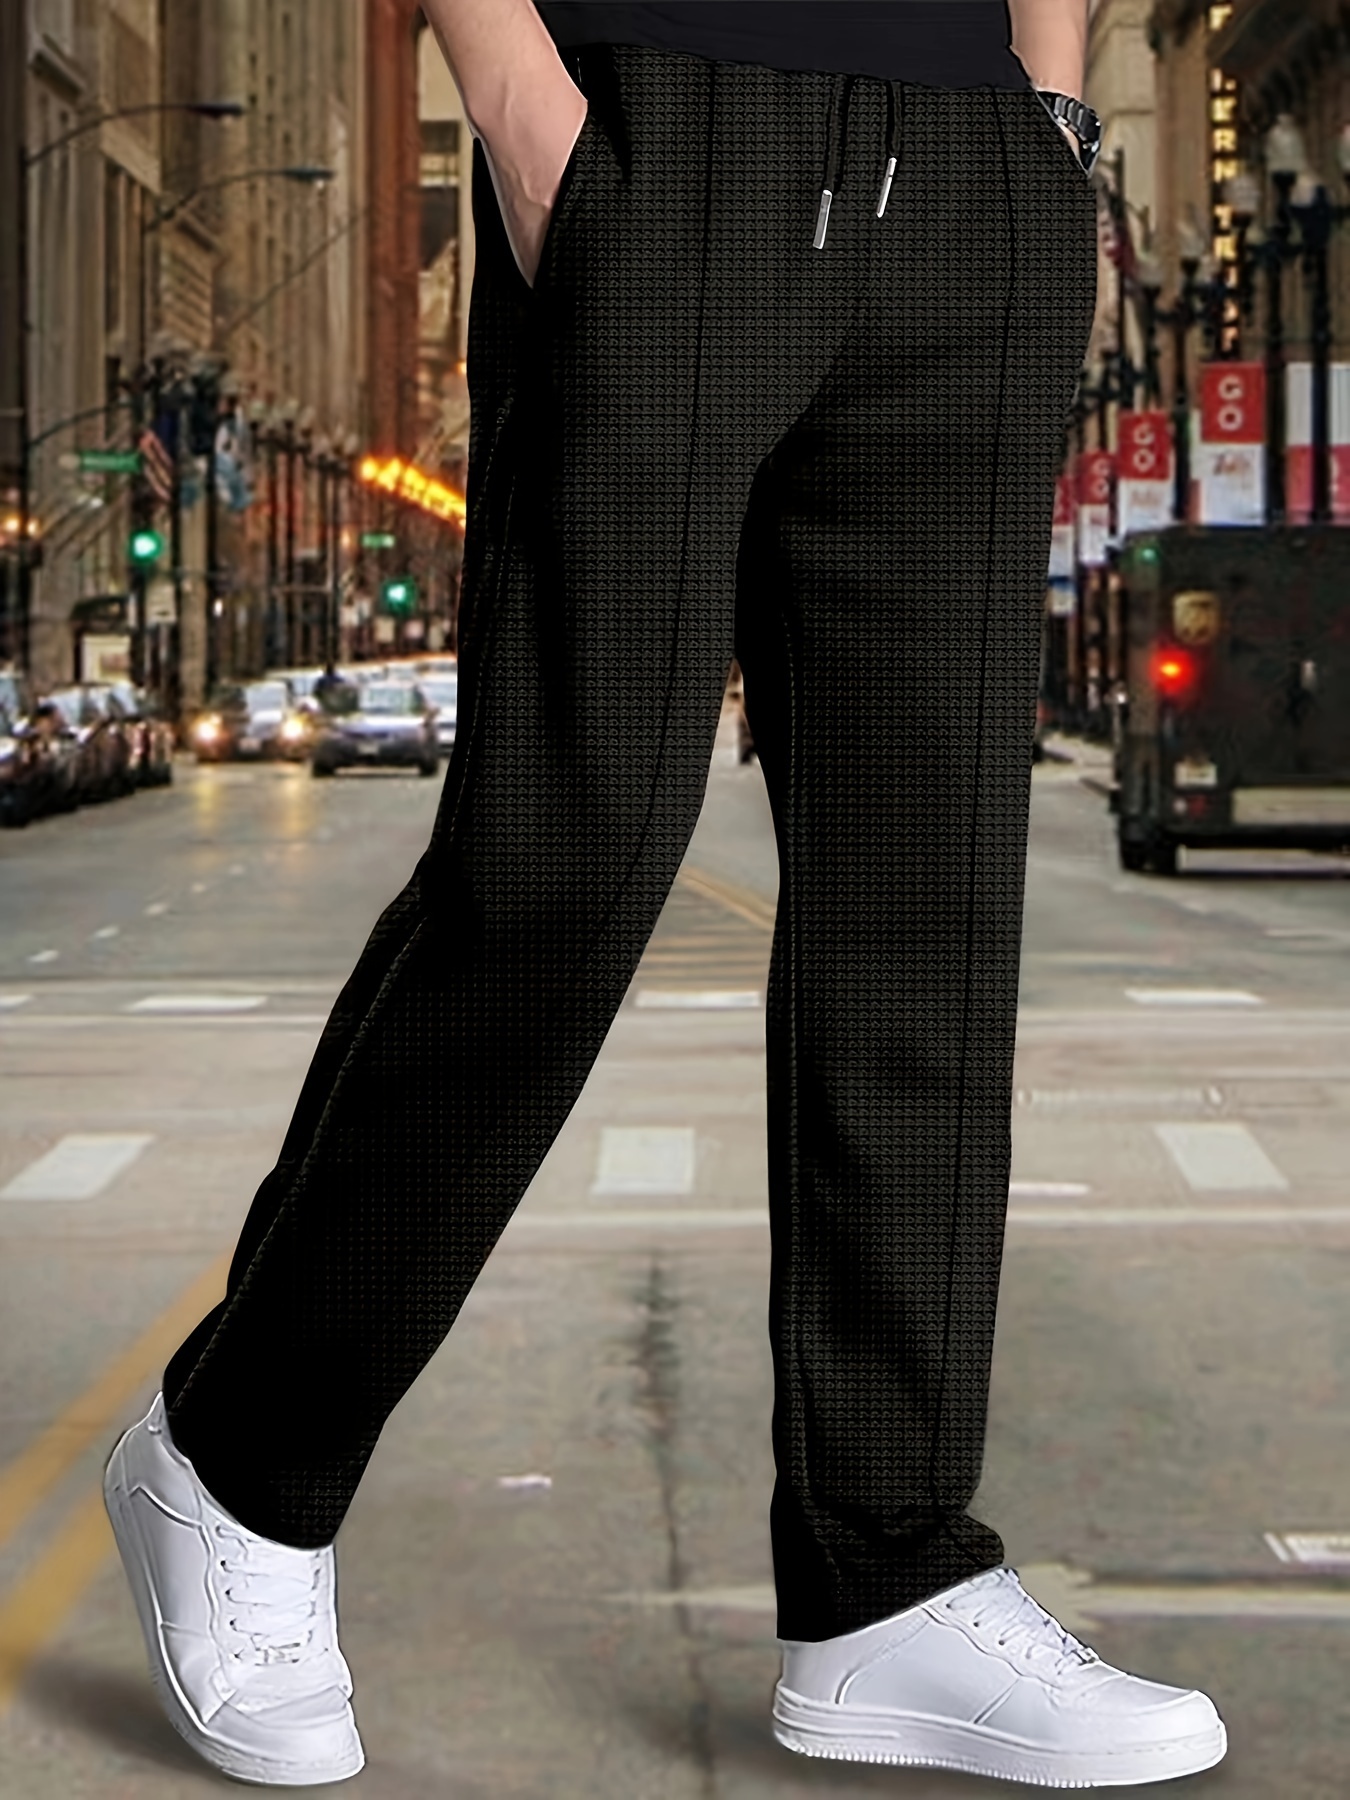 Men's Fashion Plaid Pants black and White 